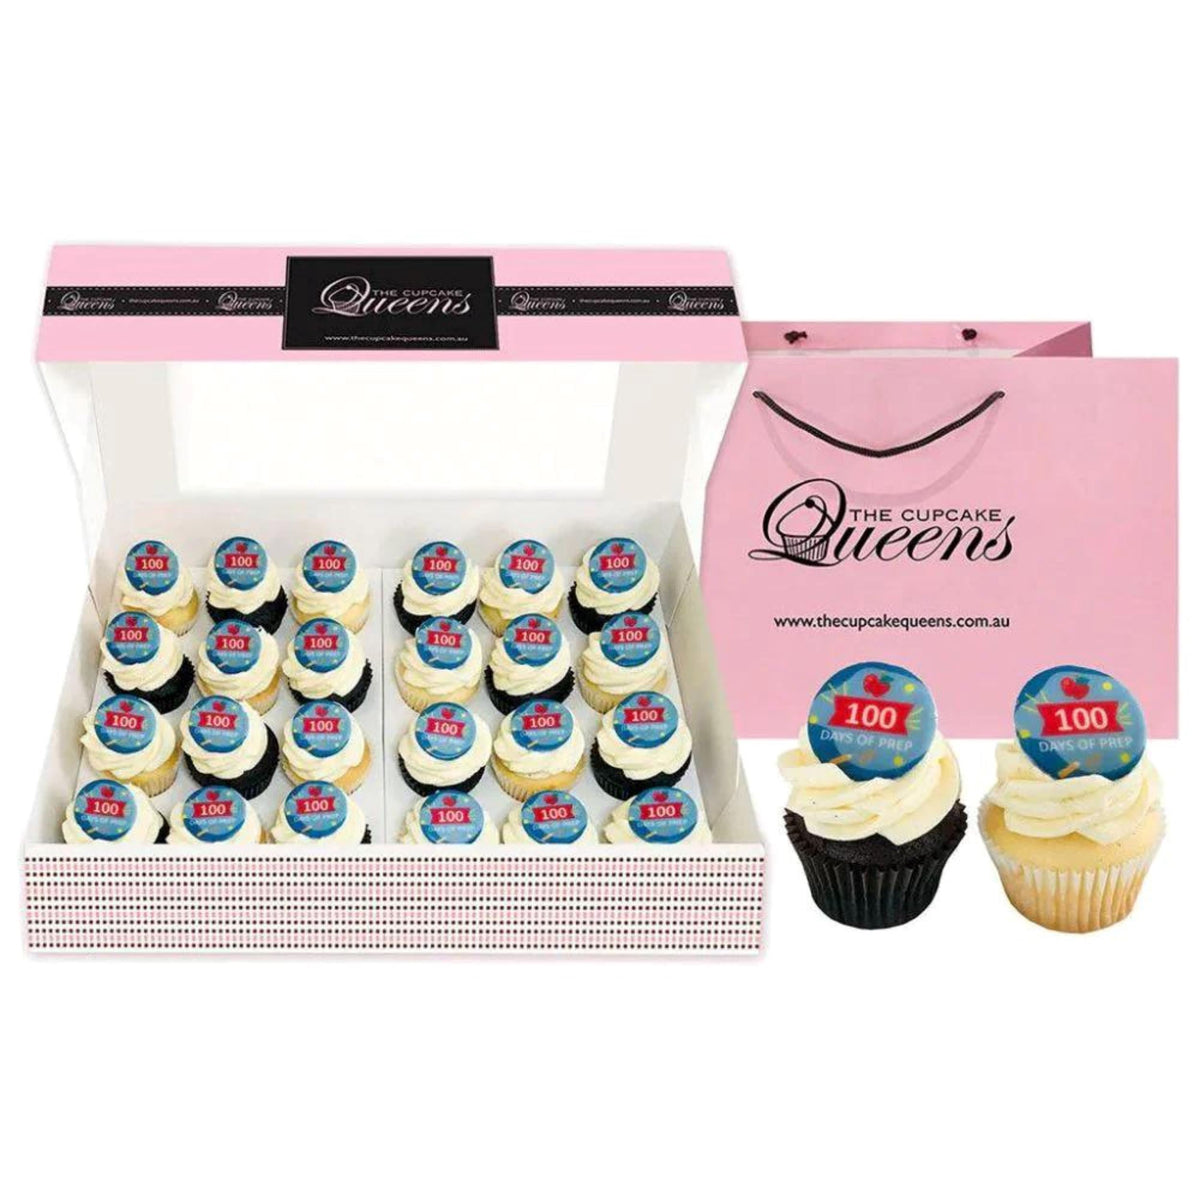 100 Days of Prep Mini box Cupcakes The Cupcake Queens 